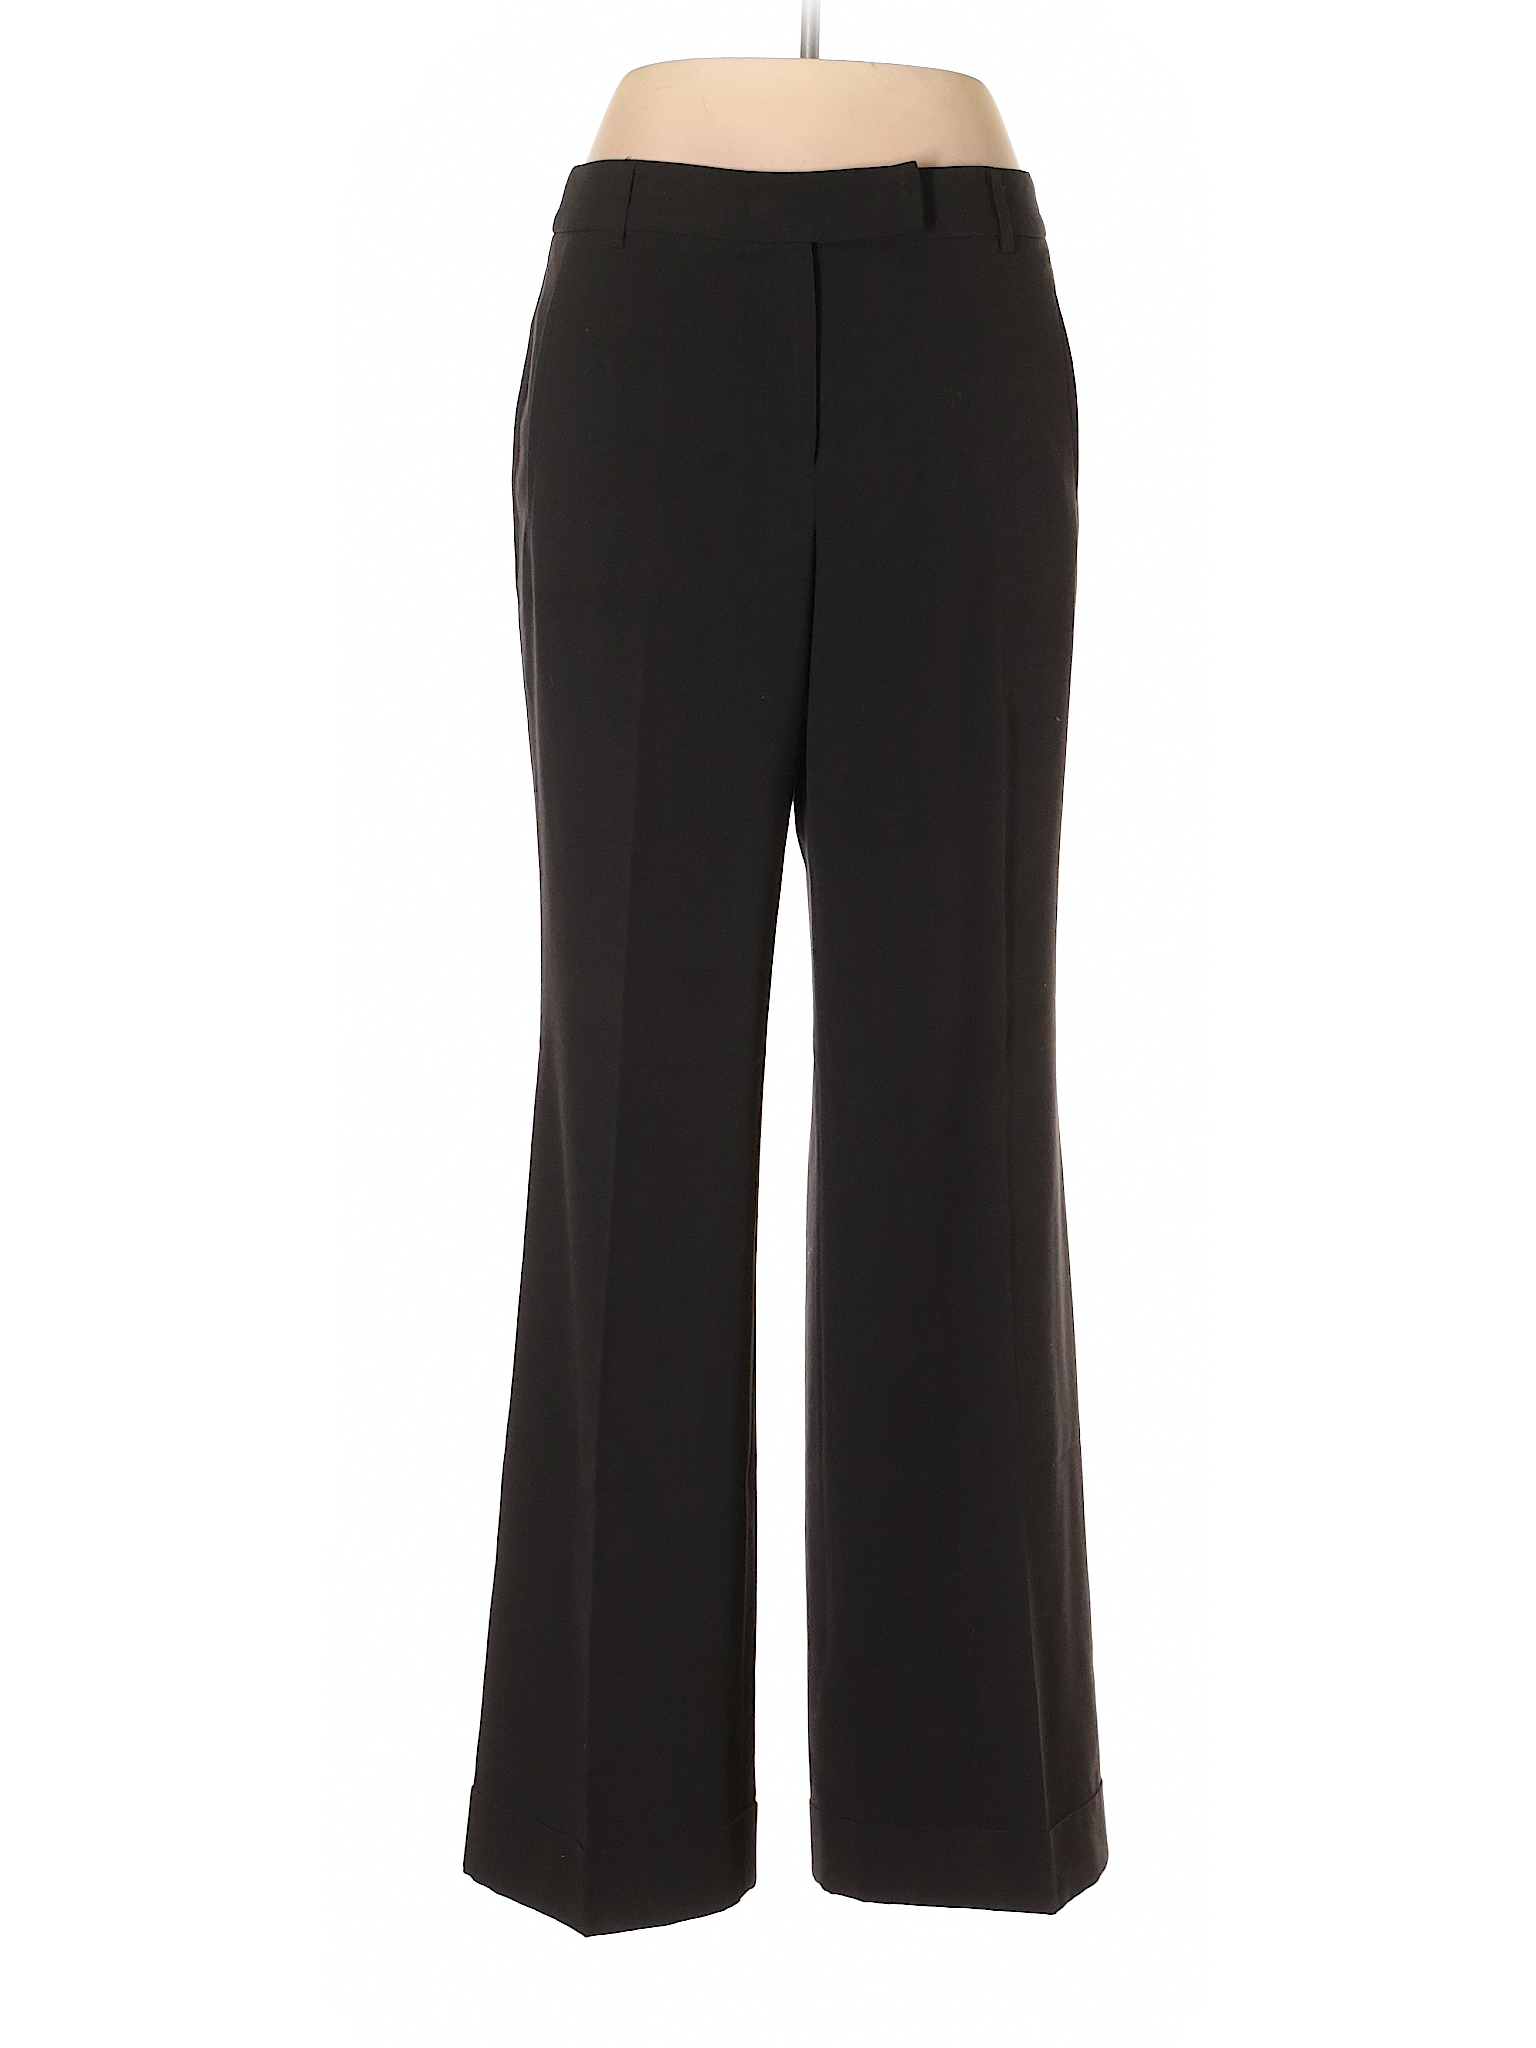 Moda International Solid Black Dress Pants Size 10 - 96% off | thredUP